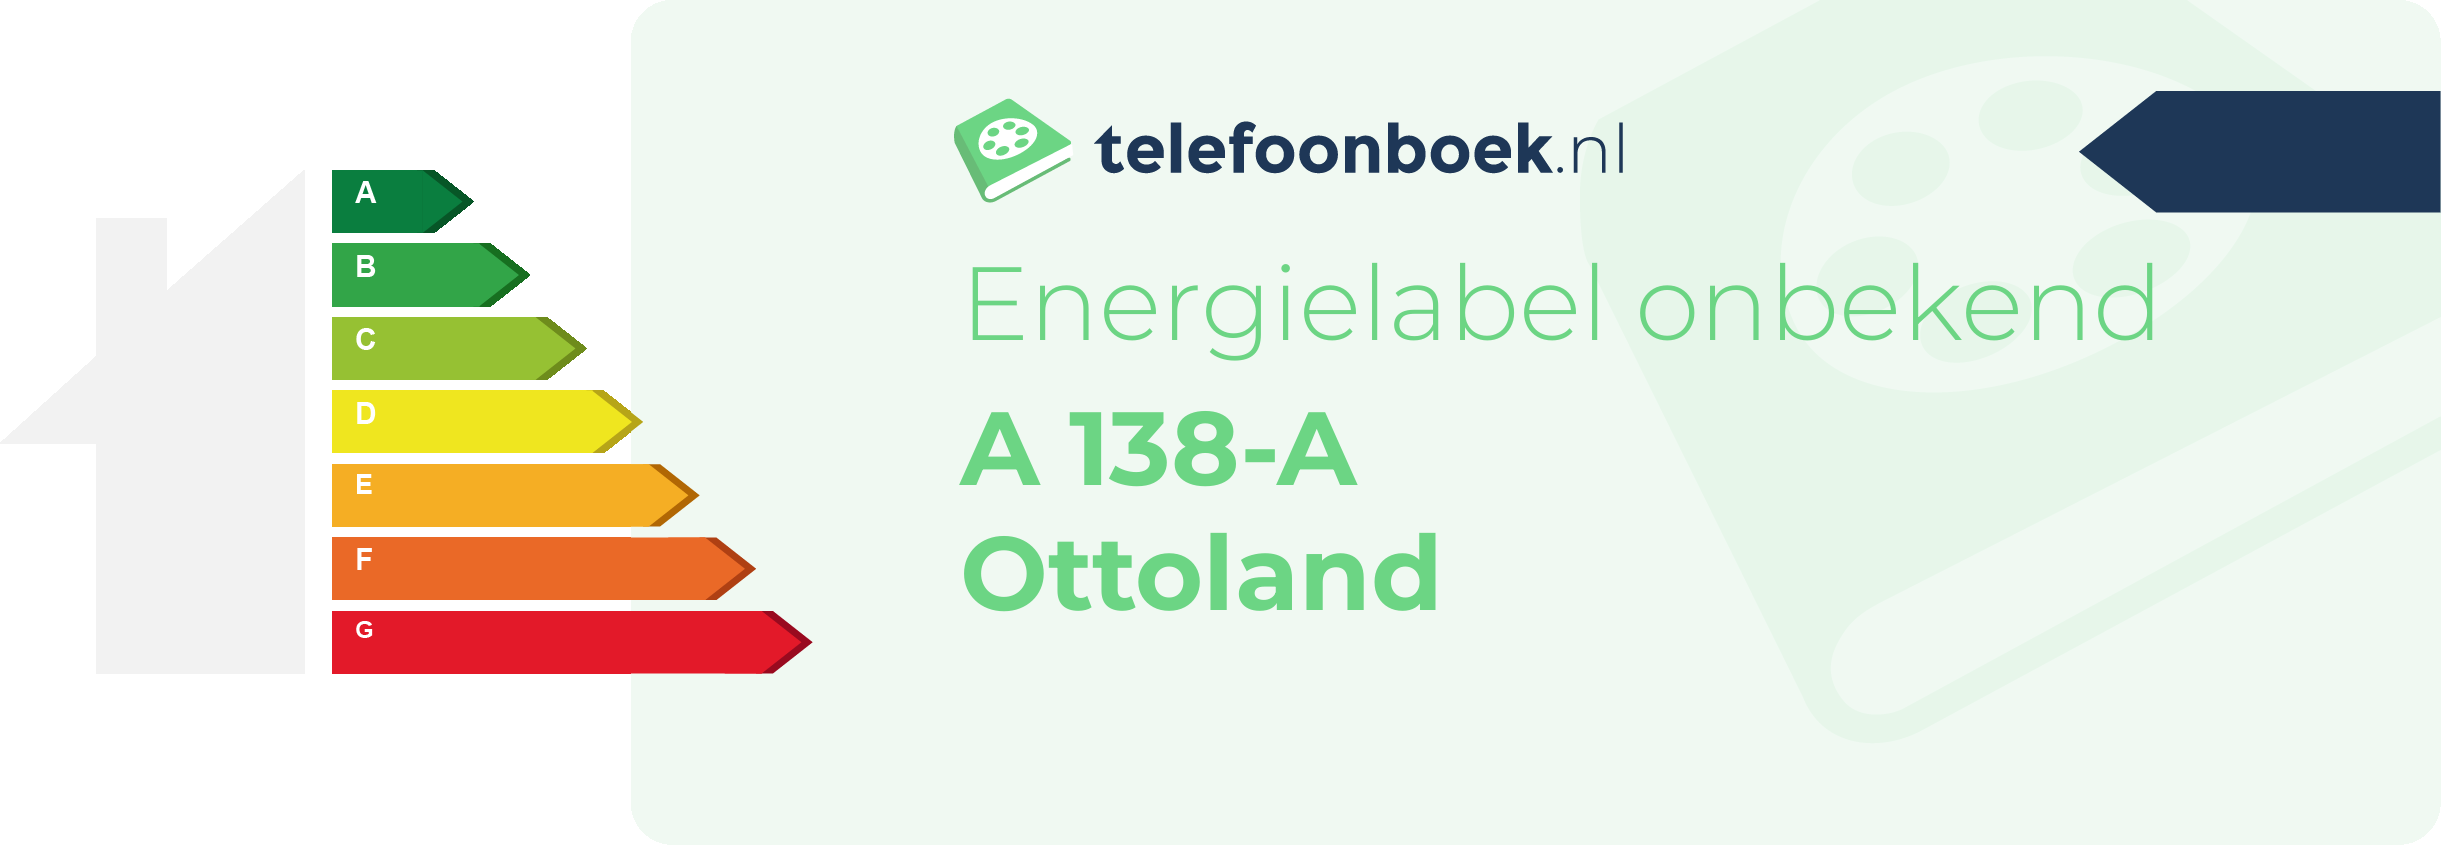 Energielabel A 138-A Ottoland